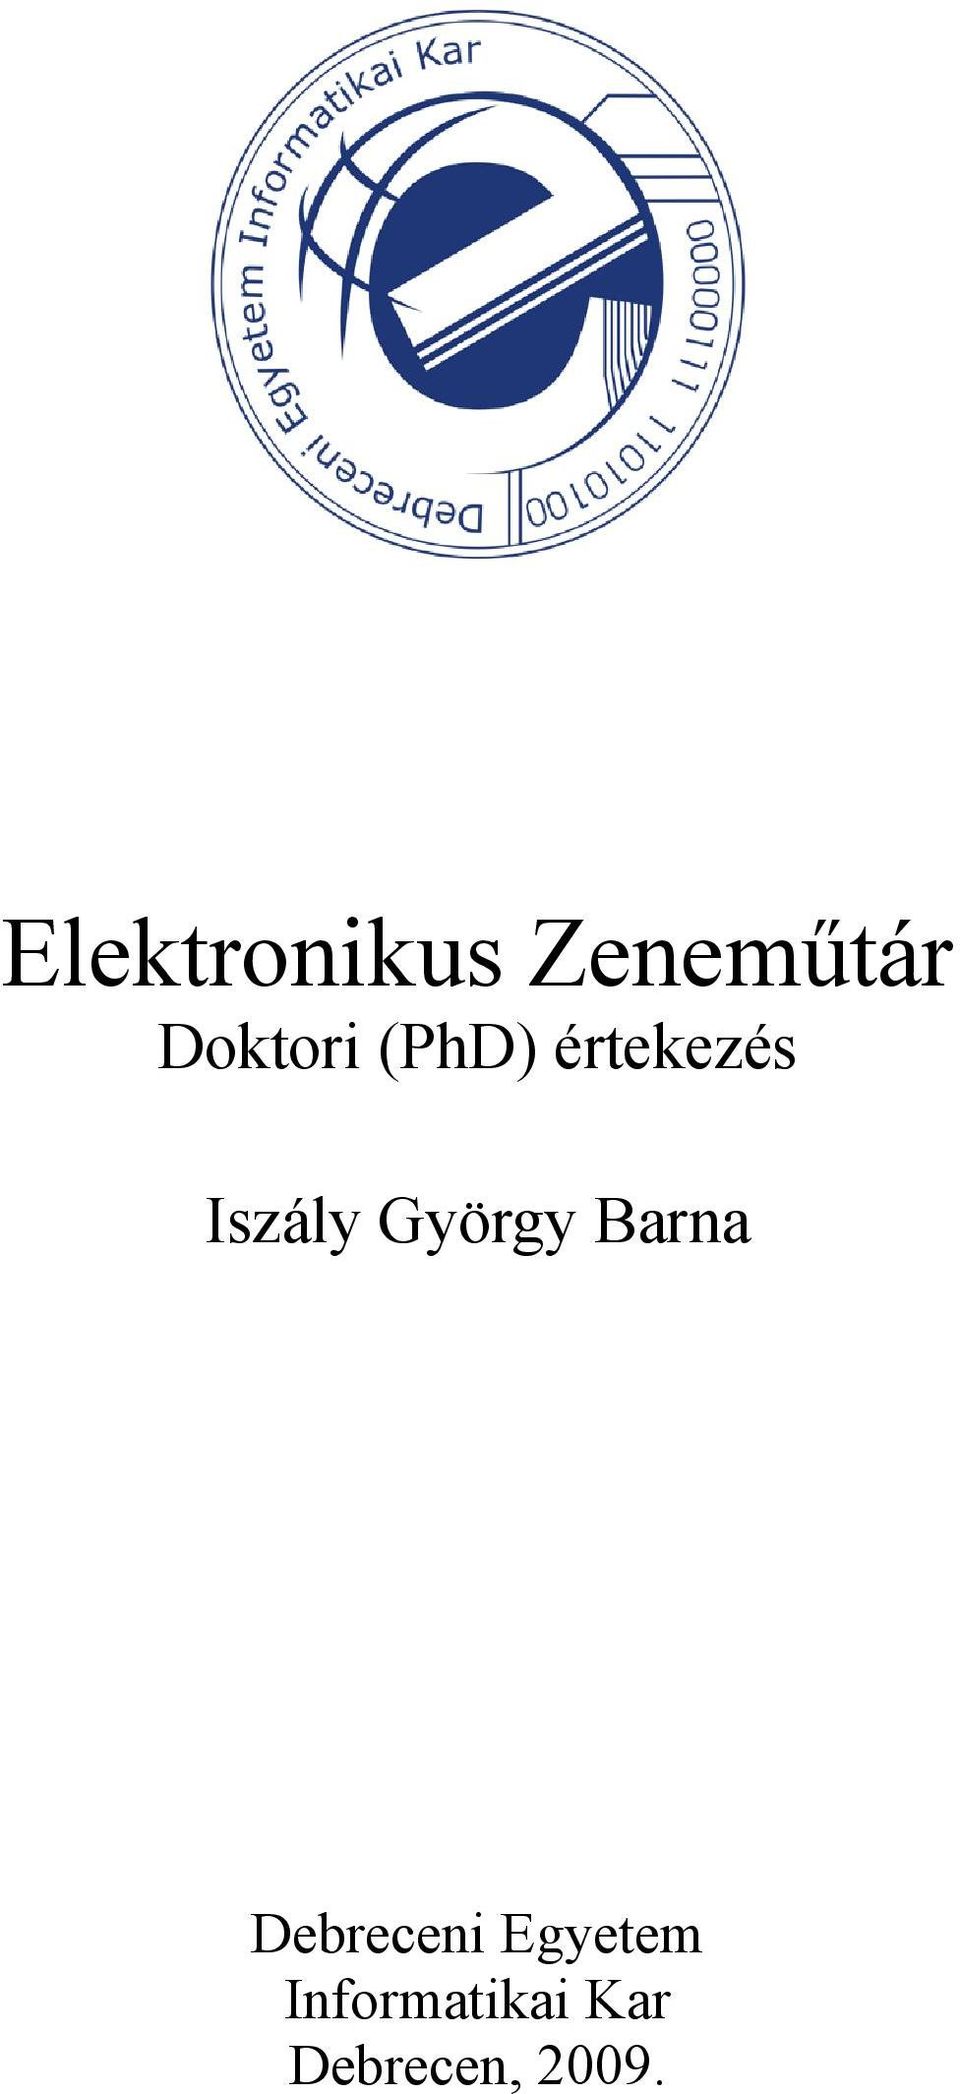 Iszály György Barna Debreceni